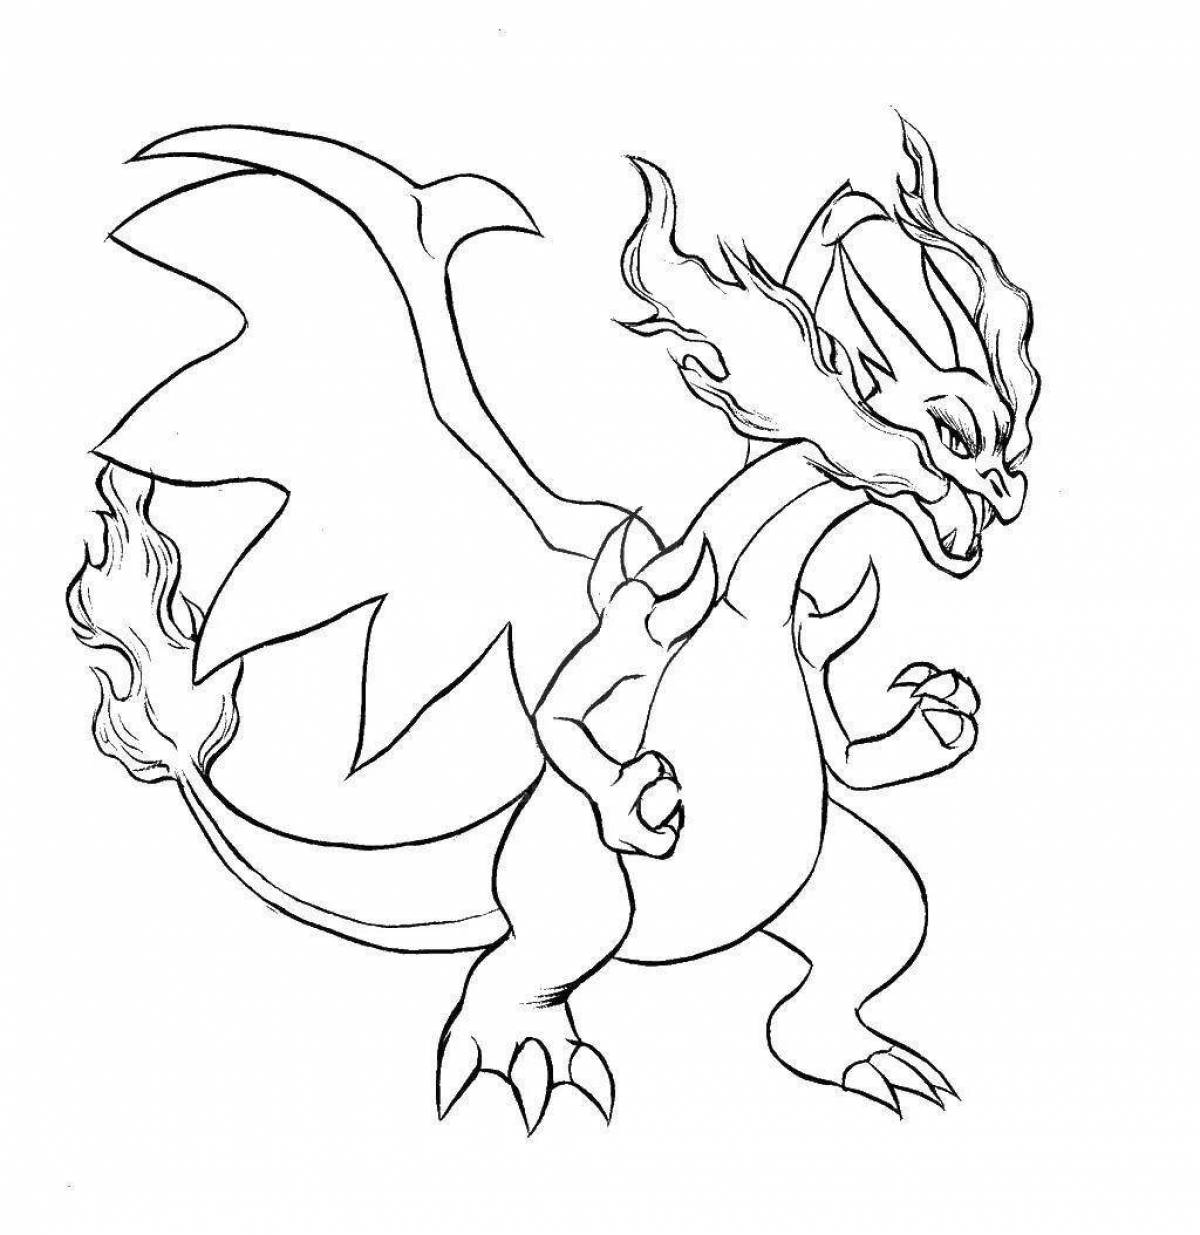 Dragon mania scary coloring book